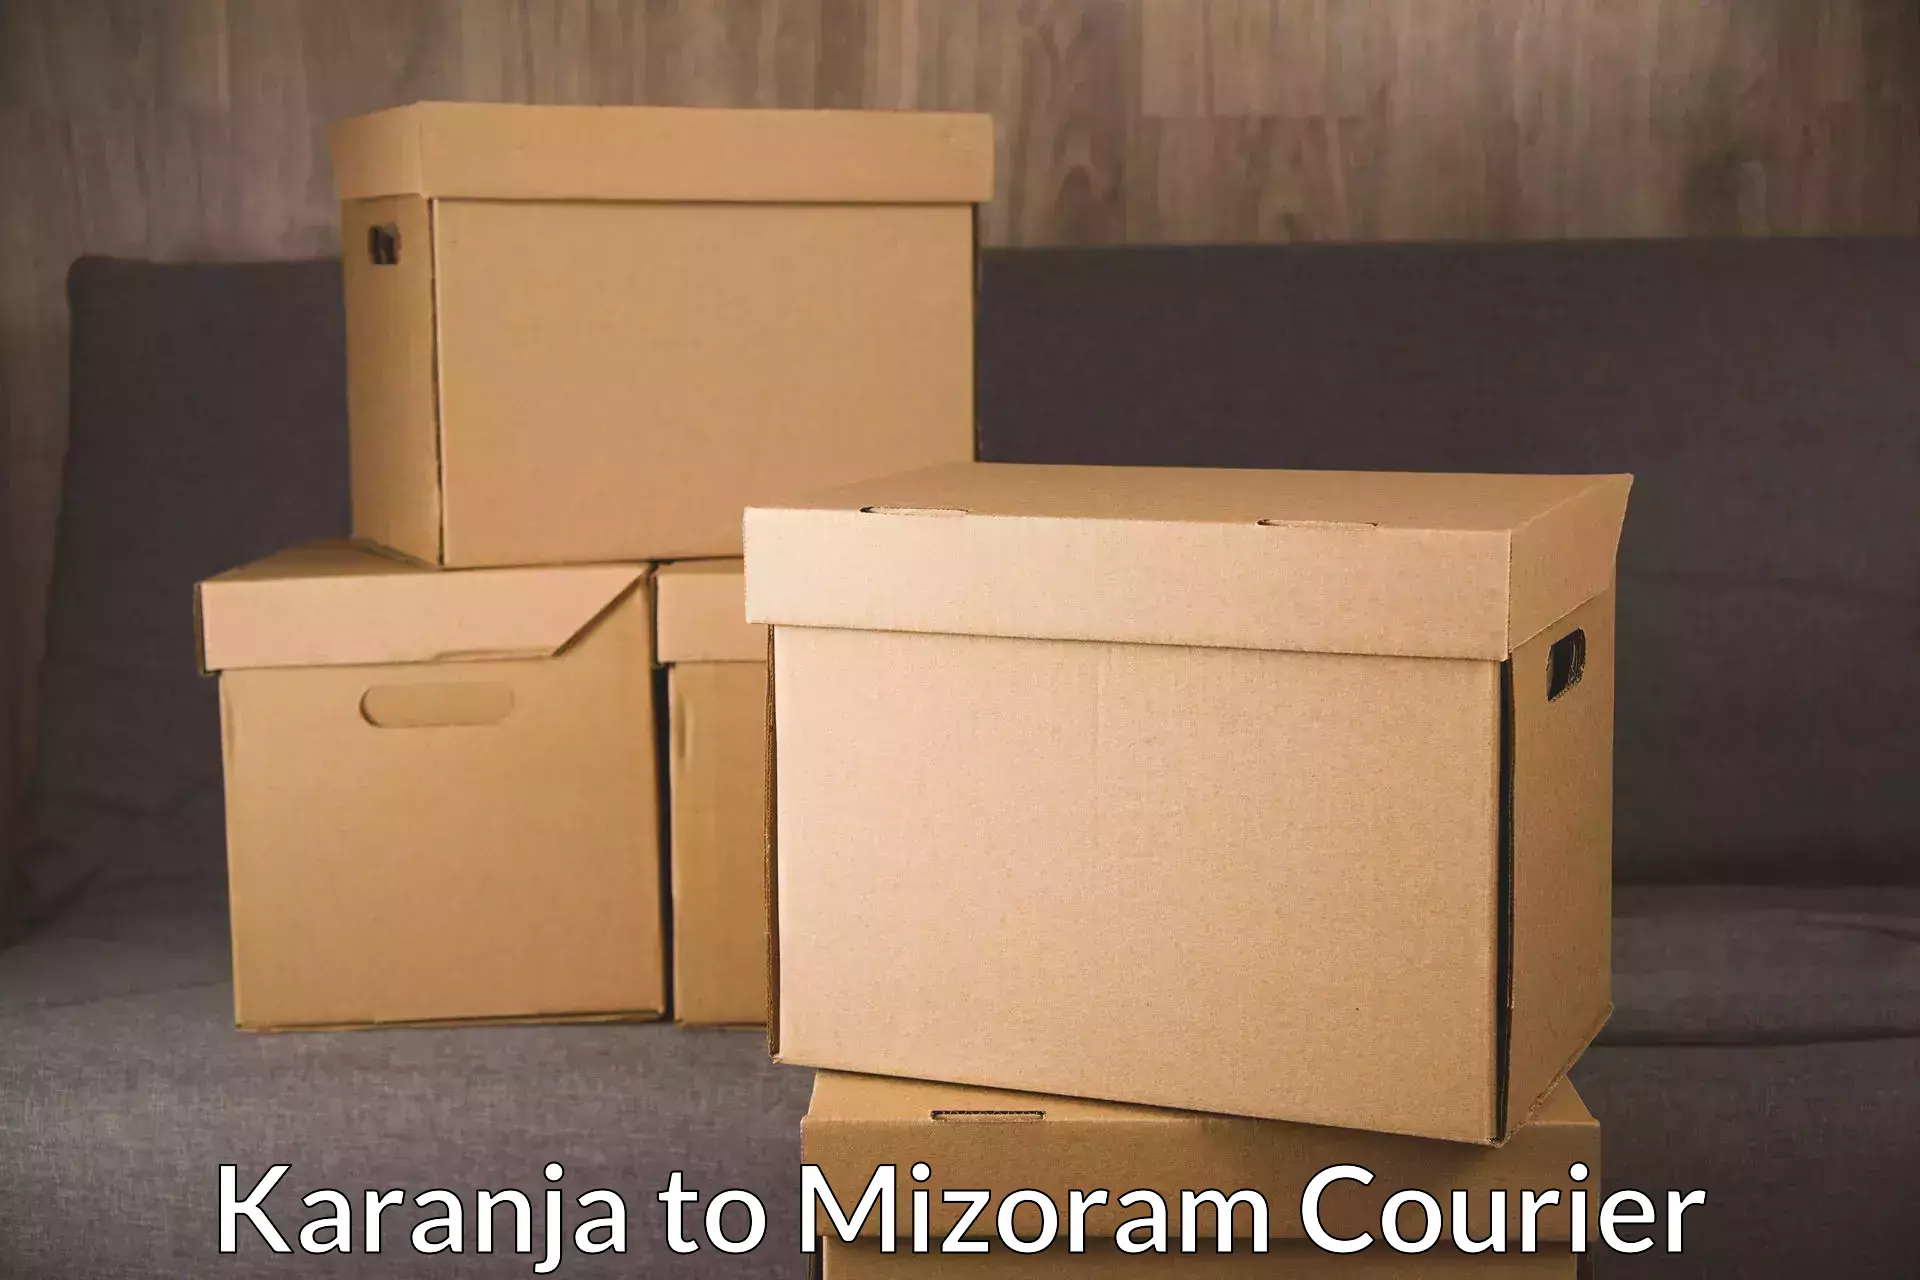 Expedited parcel delivery in Karanja to Mizoram